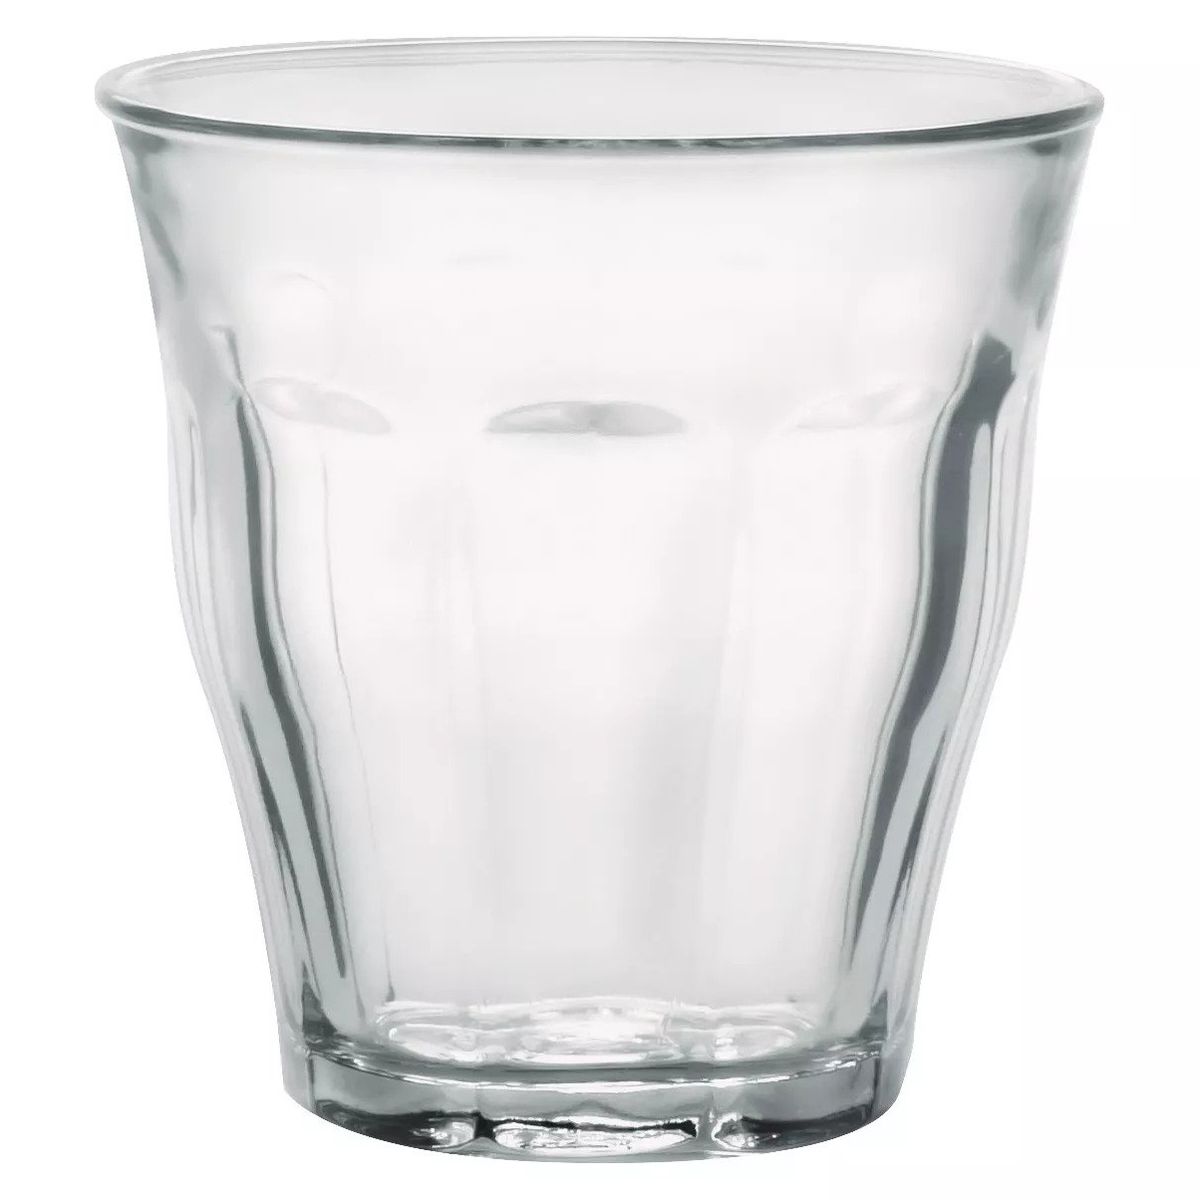 A single glass 